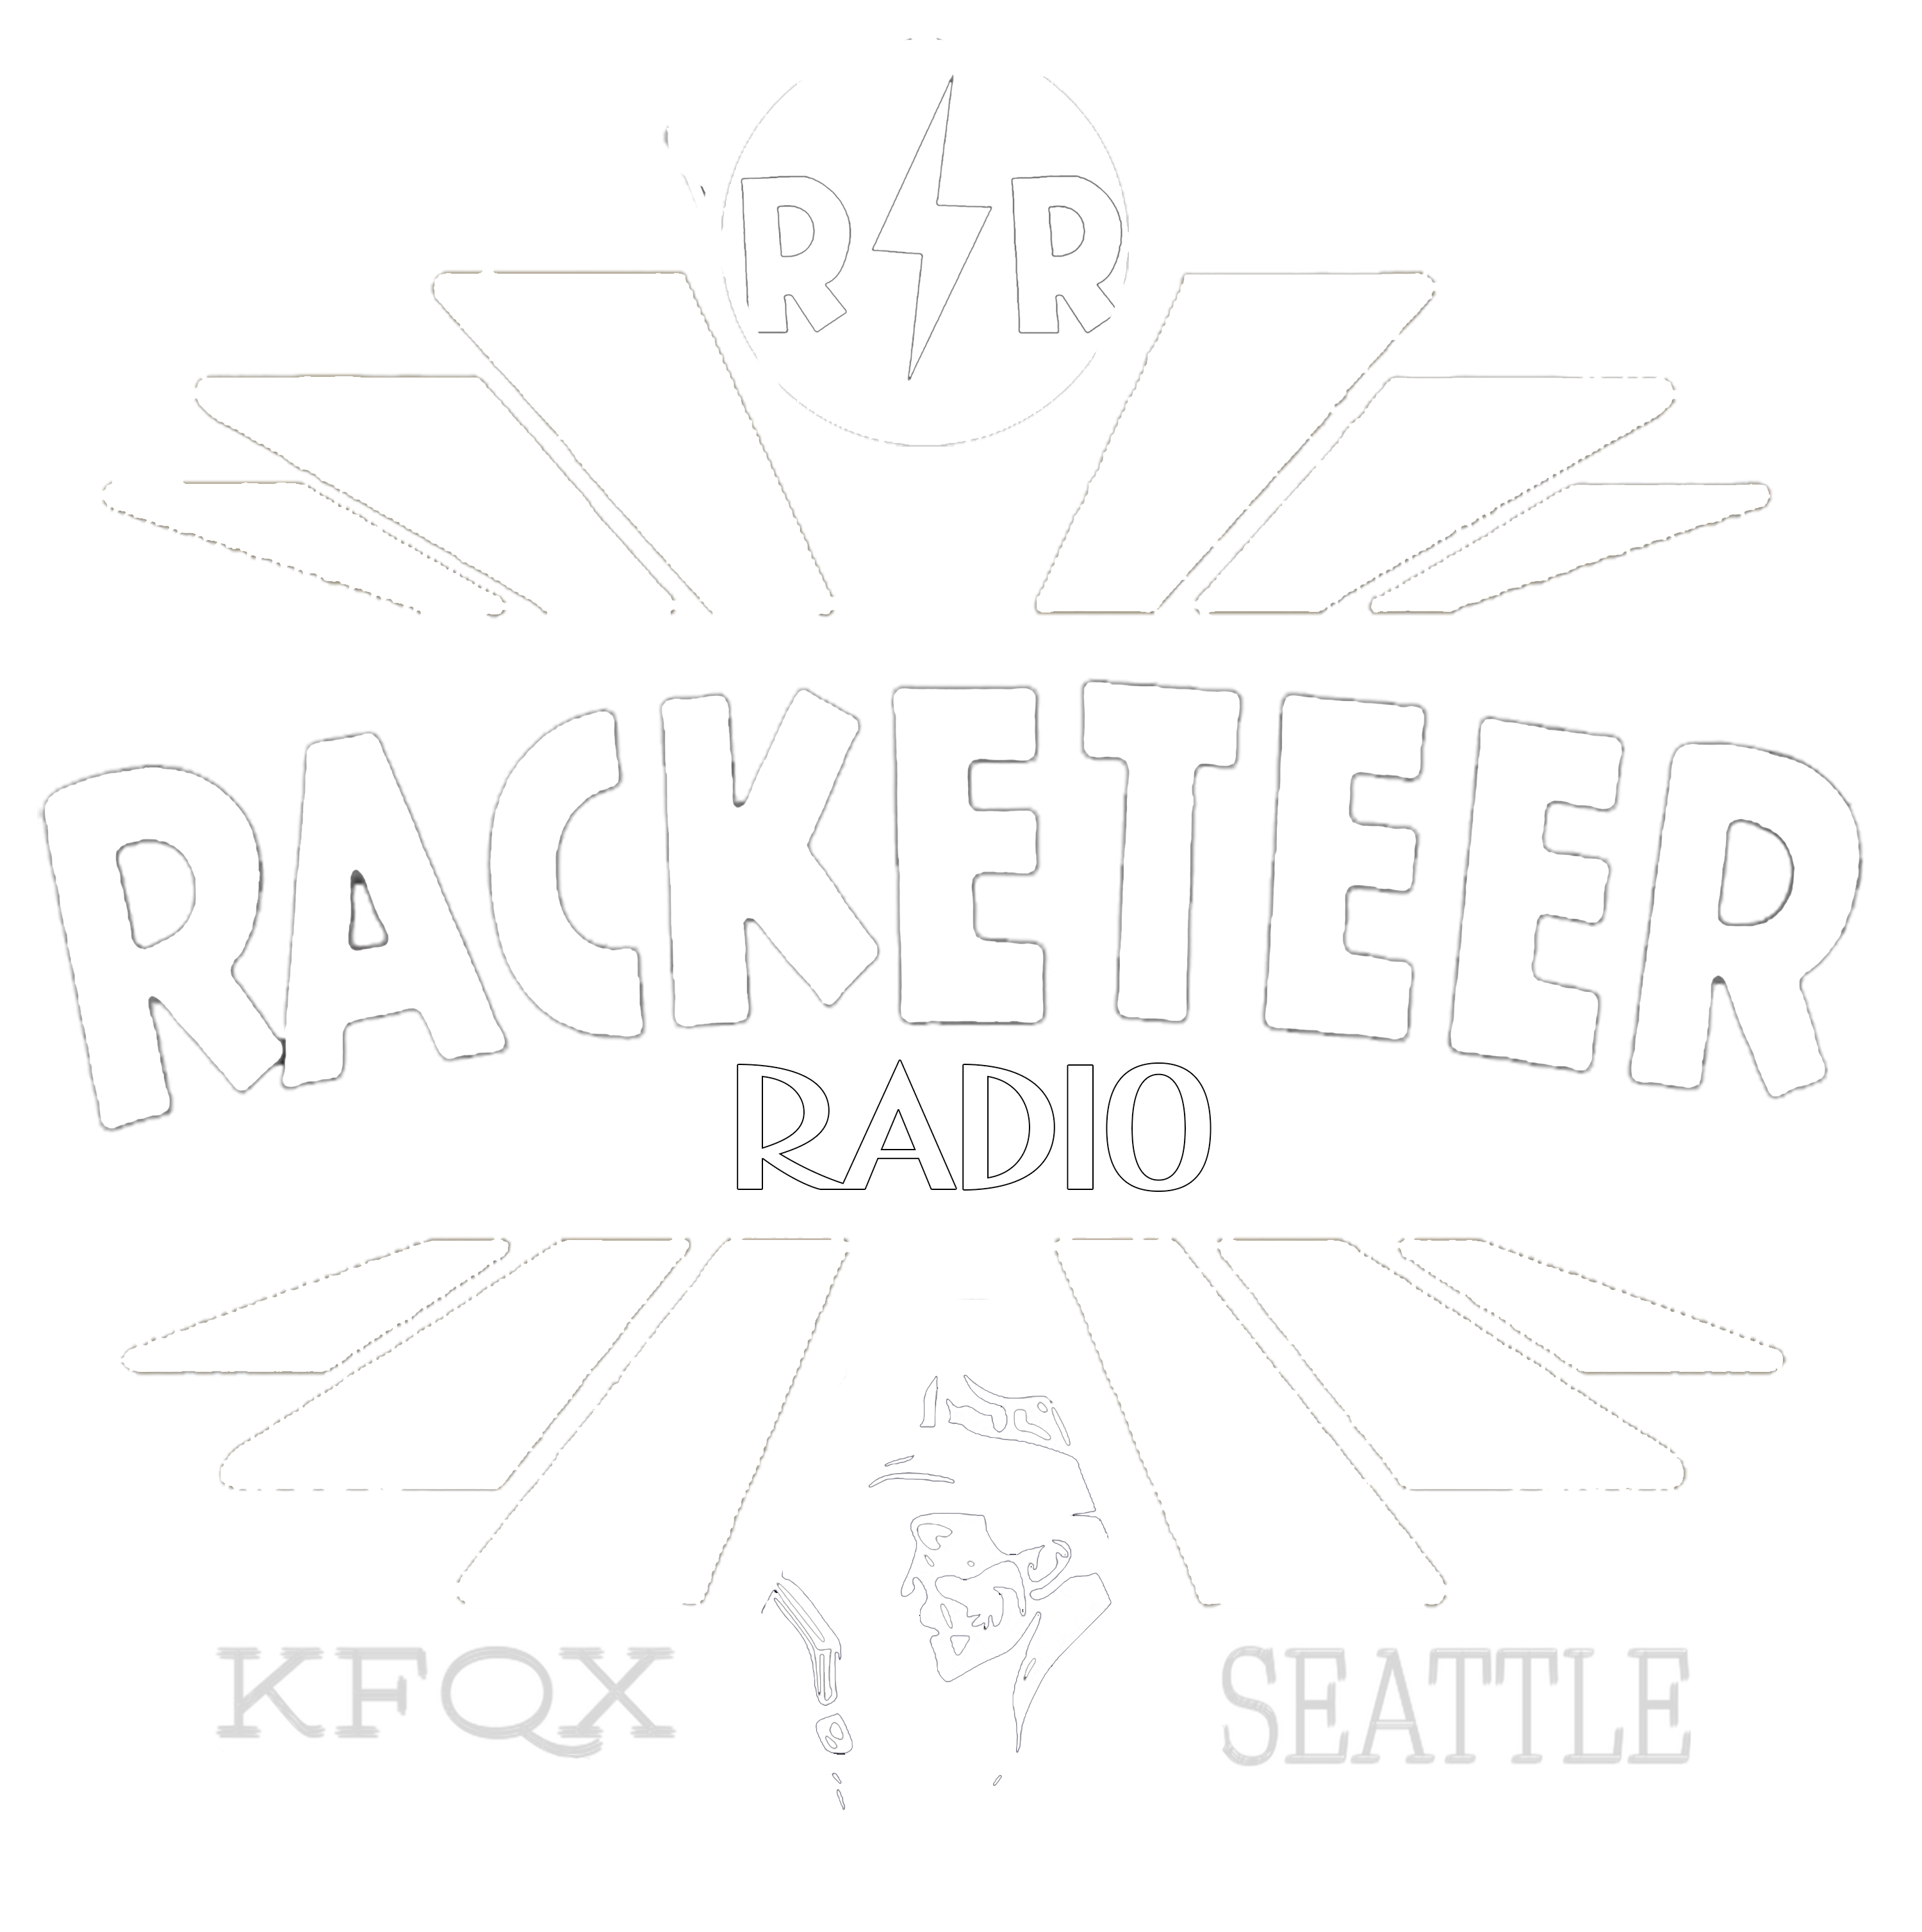 Racketeer Broadcast Association